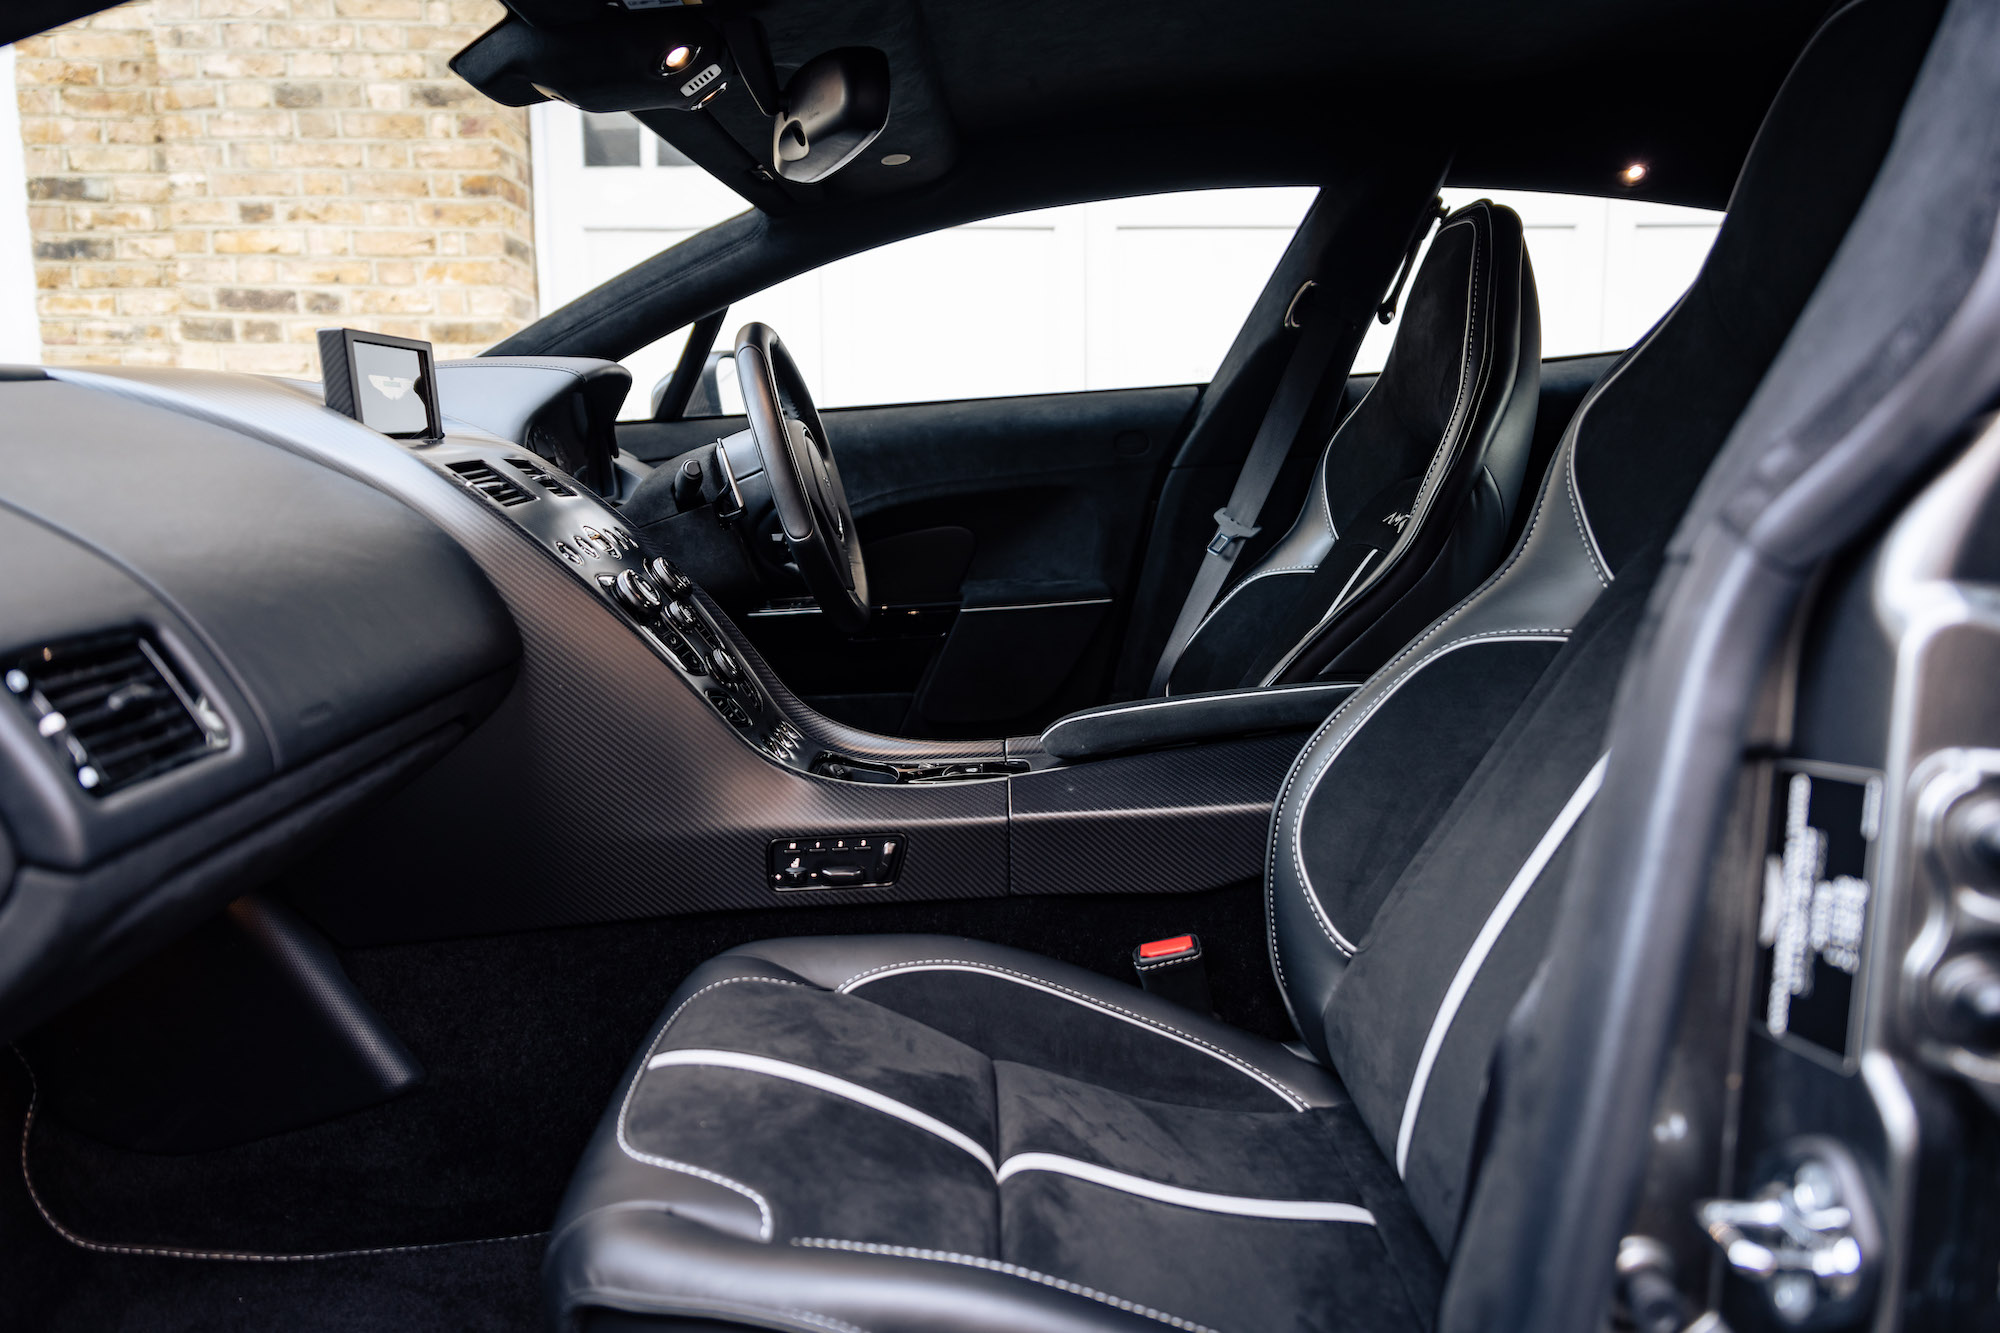 Aston Martin Rapide S Interior & Exterior Images - Rapide S Pictures